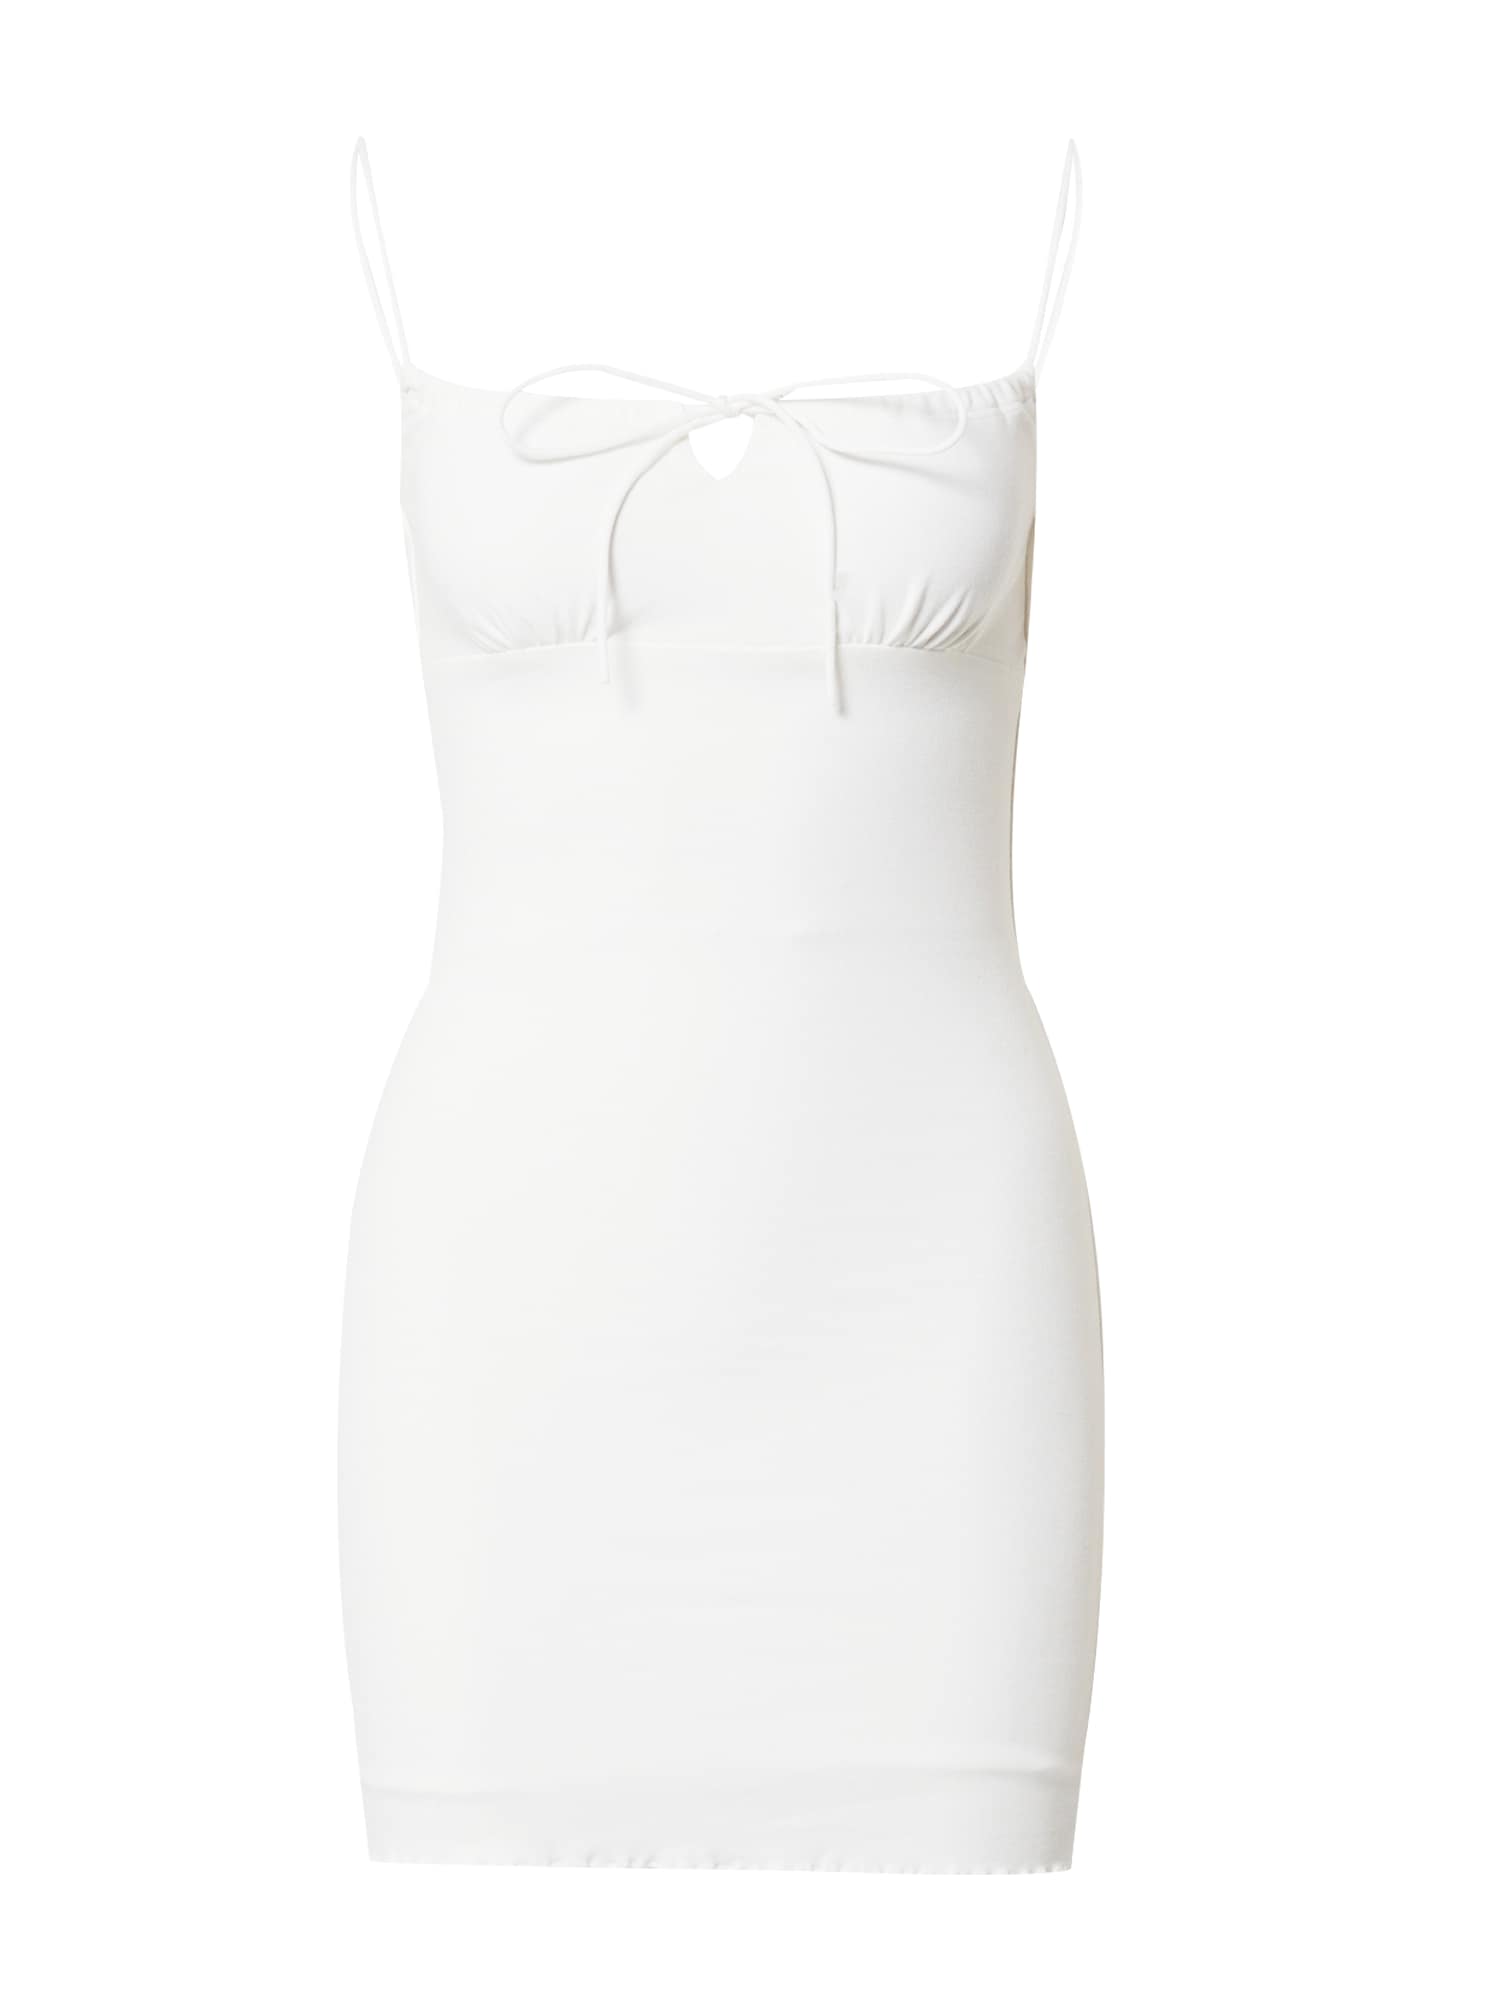 Letné šaty Capri biela Edikted